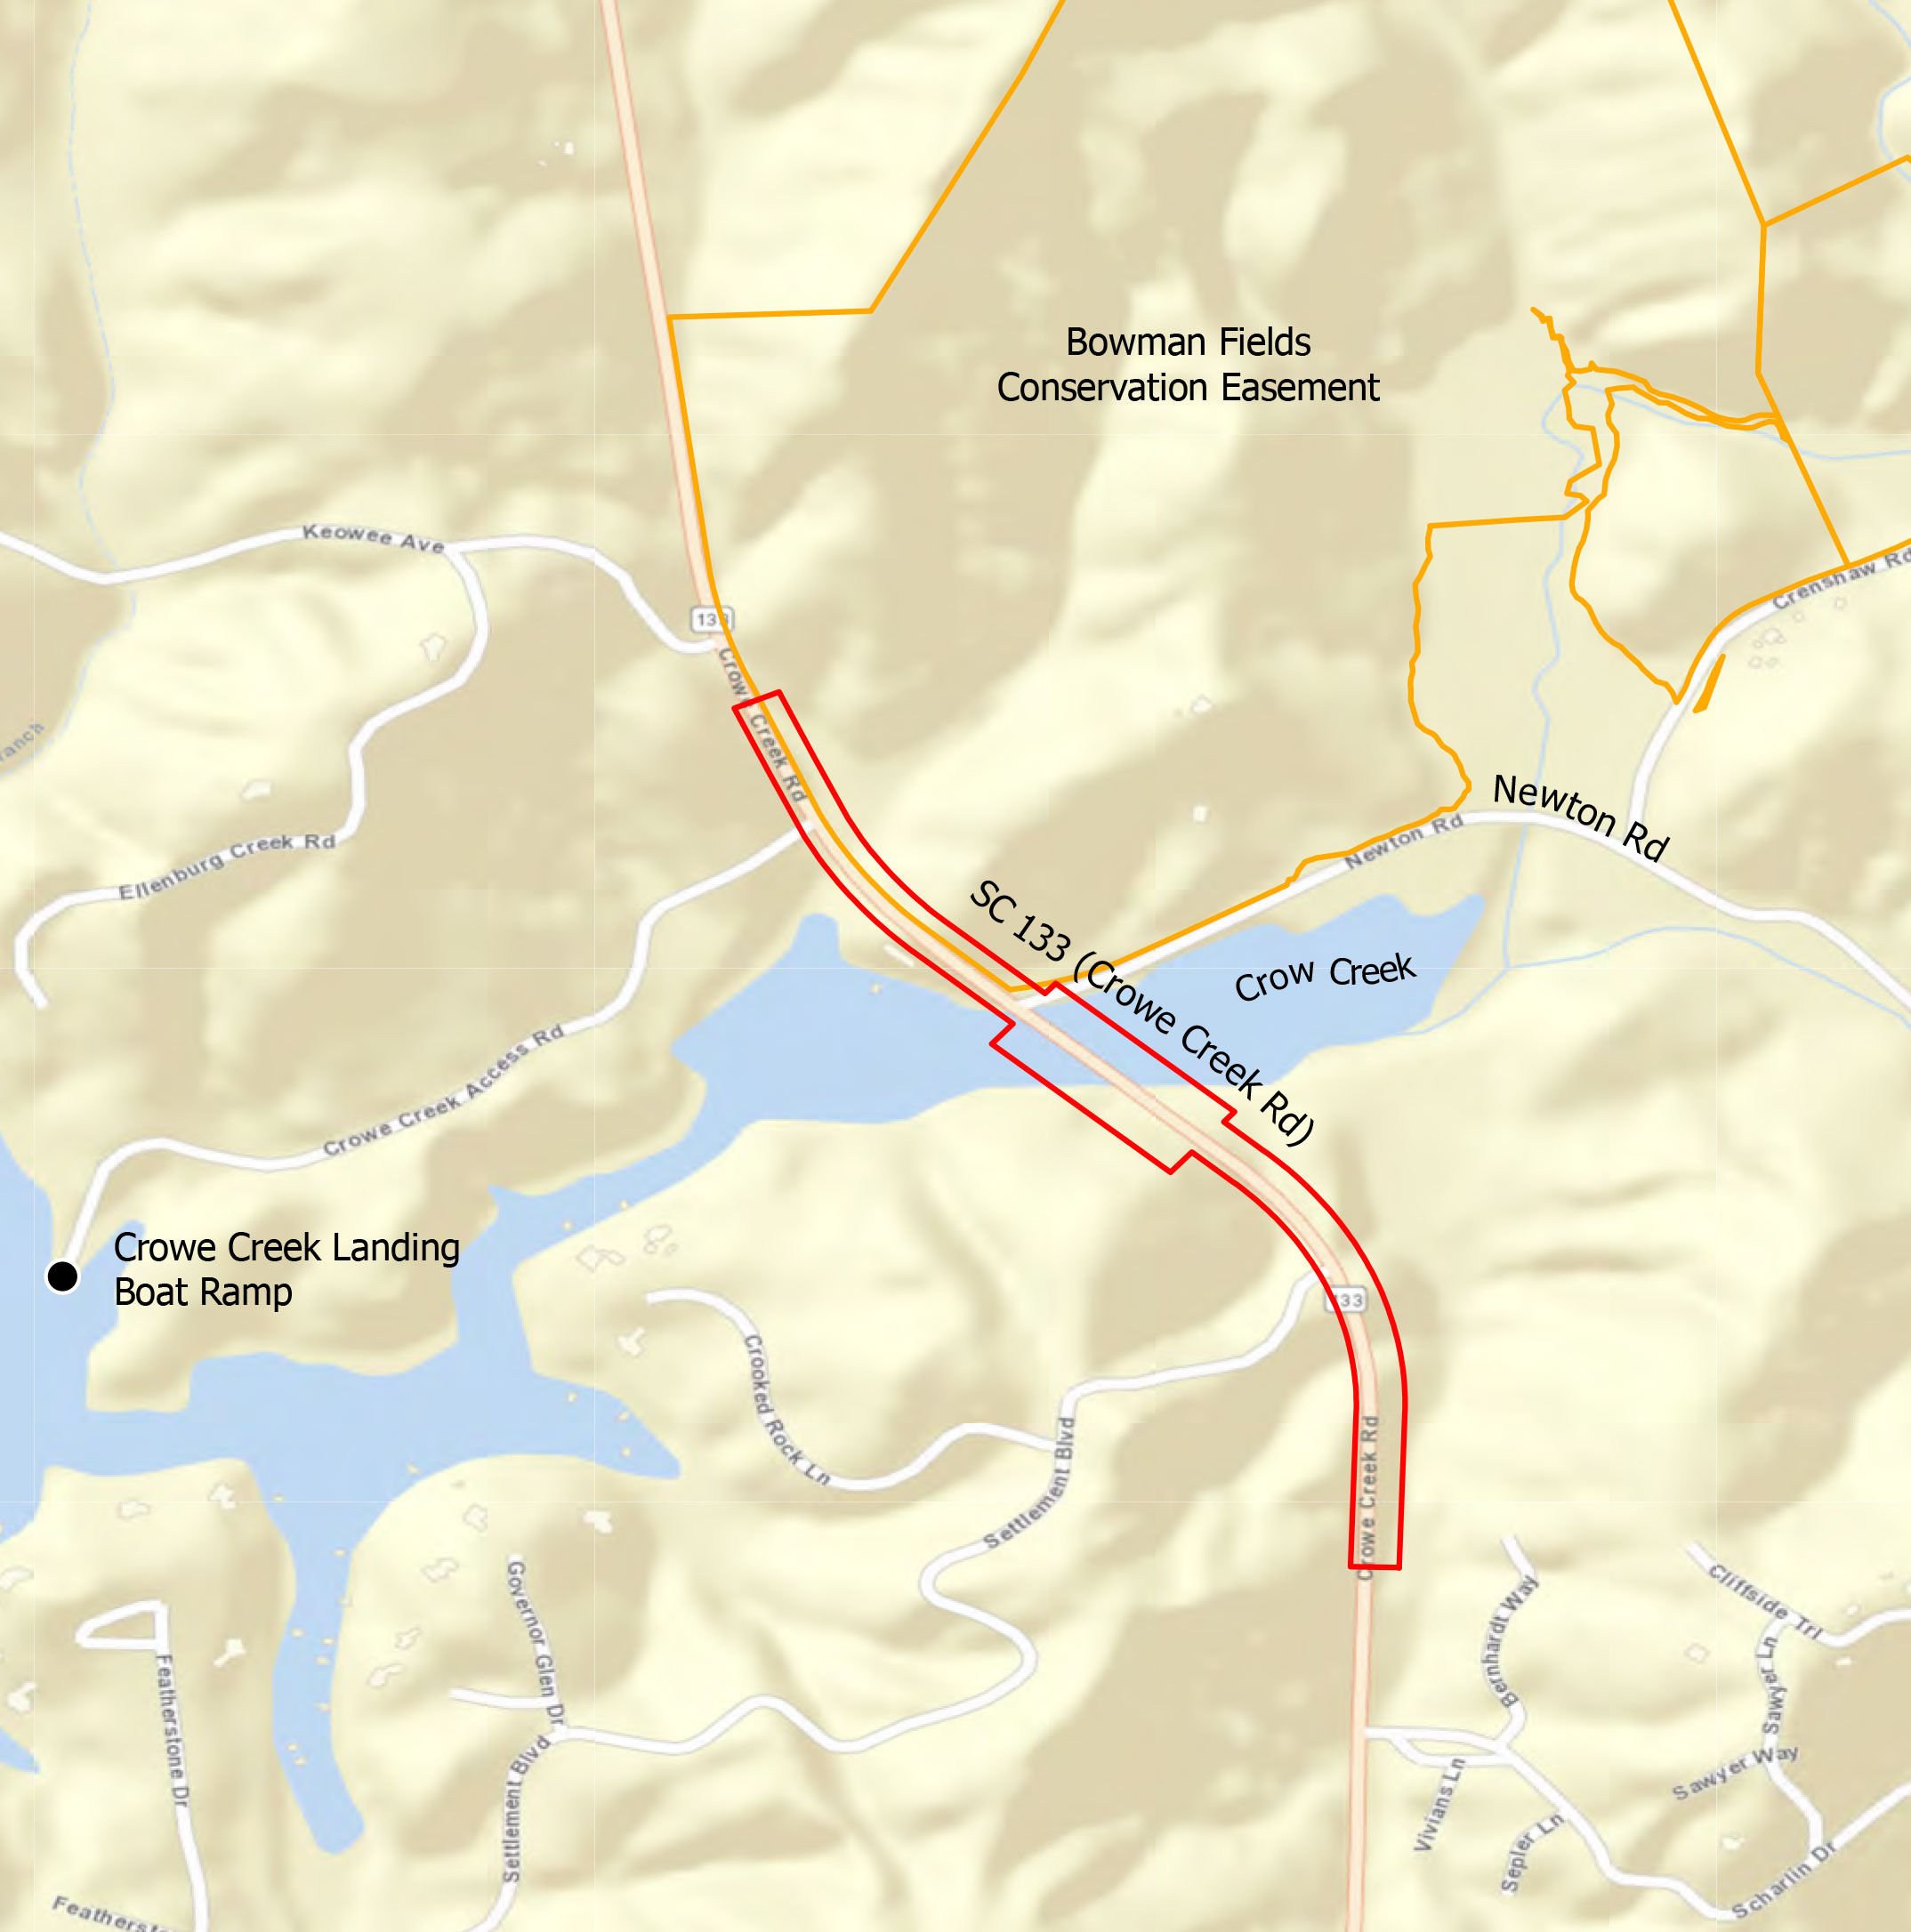 Detour map of project area